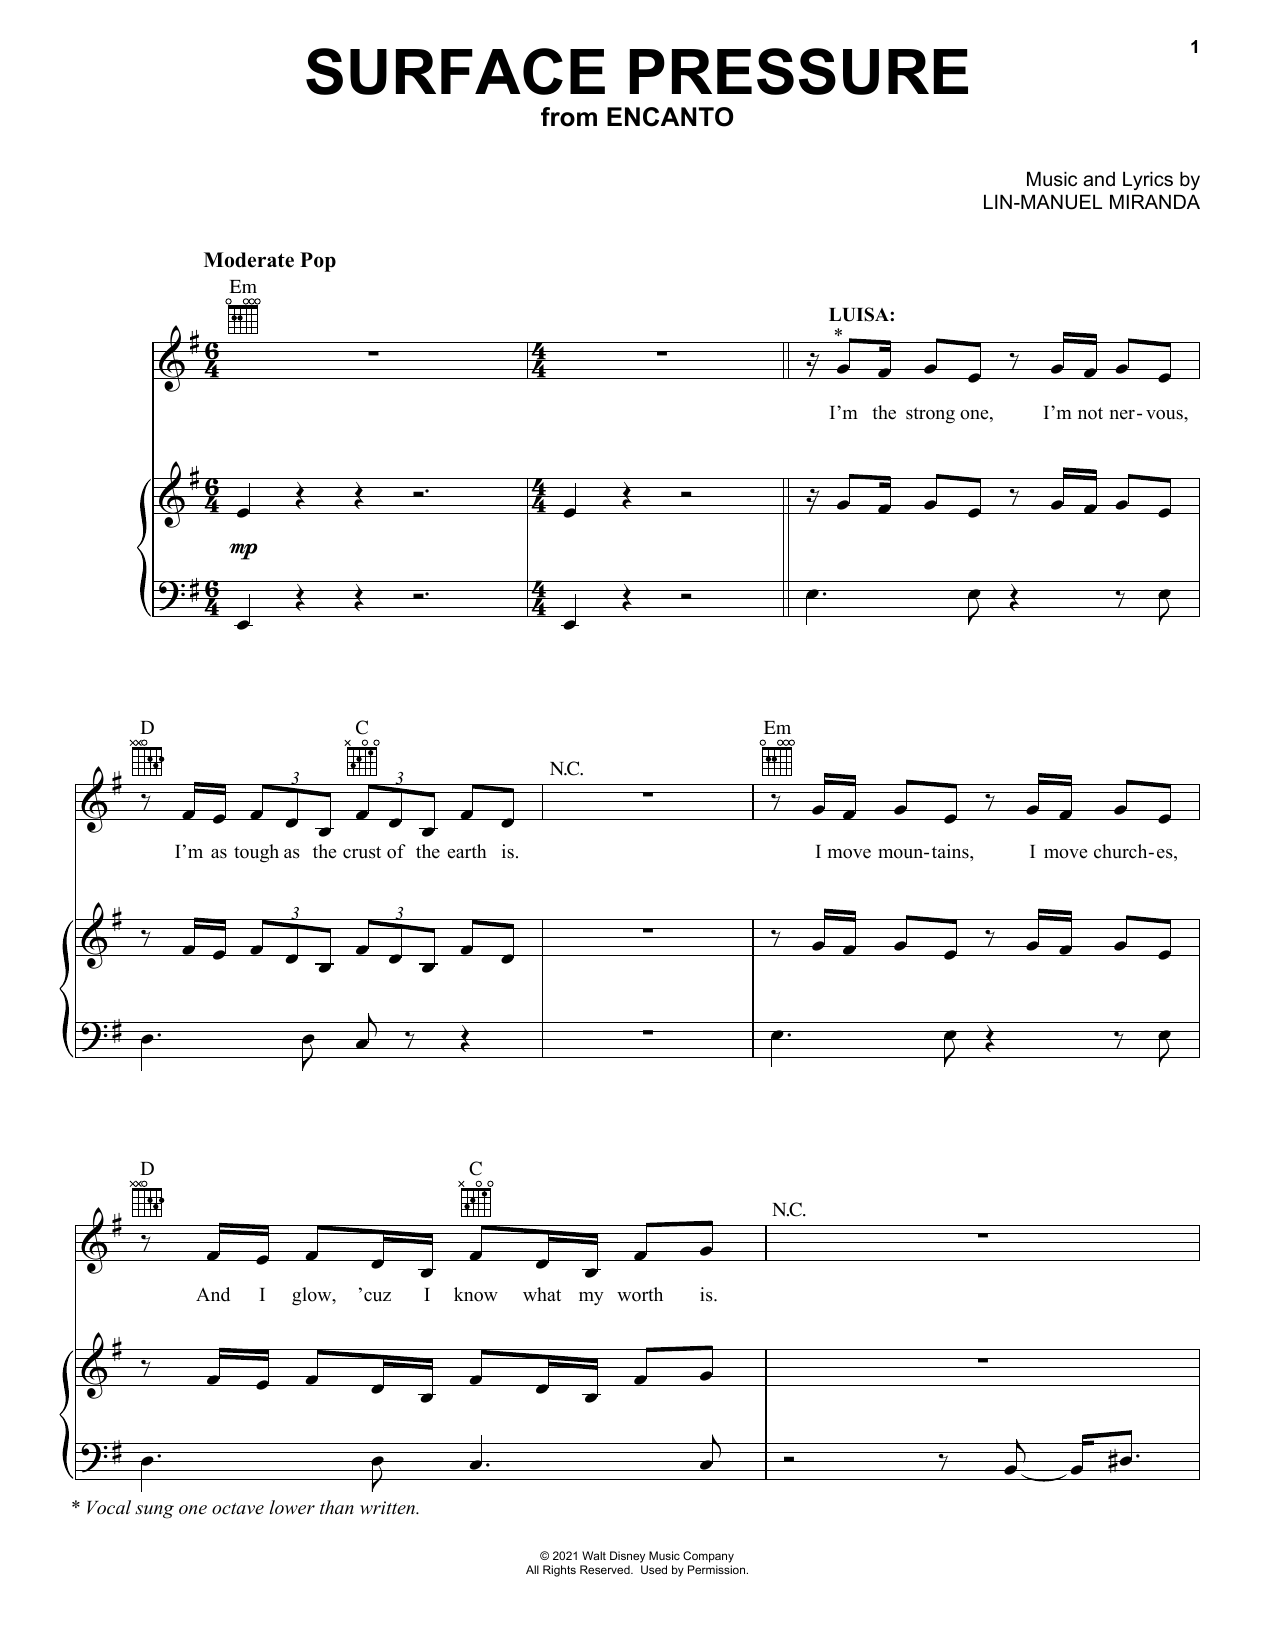 Lin-Manuel Miranda Surface Pressure (from Encanto) Sheet Music Notes & Chords for Big Note Piano - Download or Print PDF